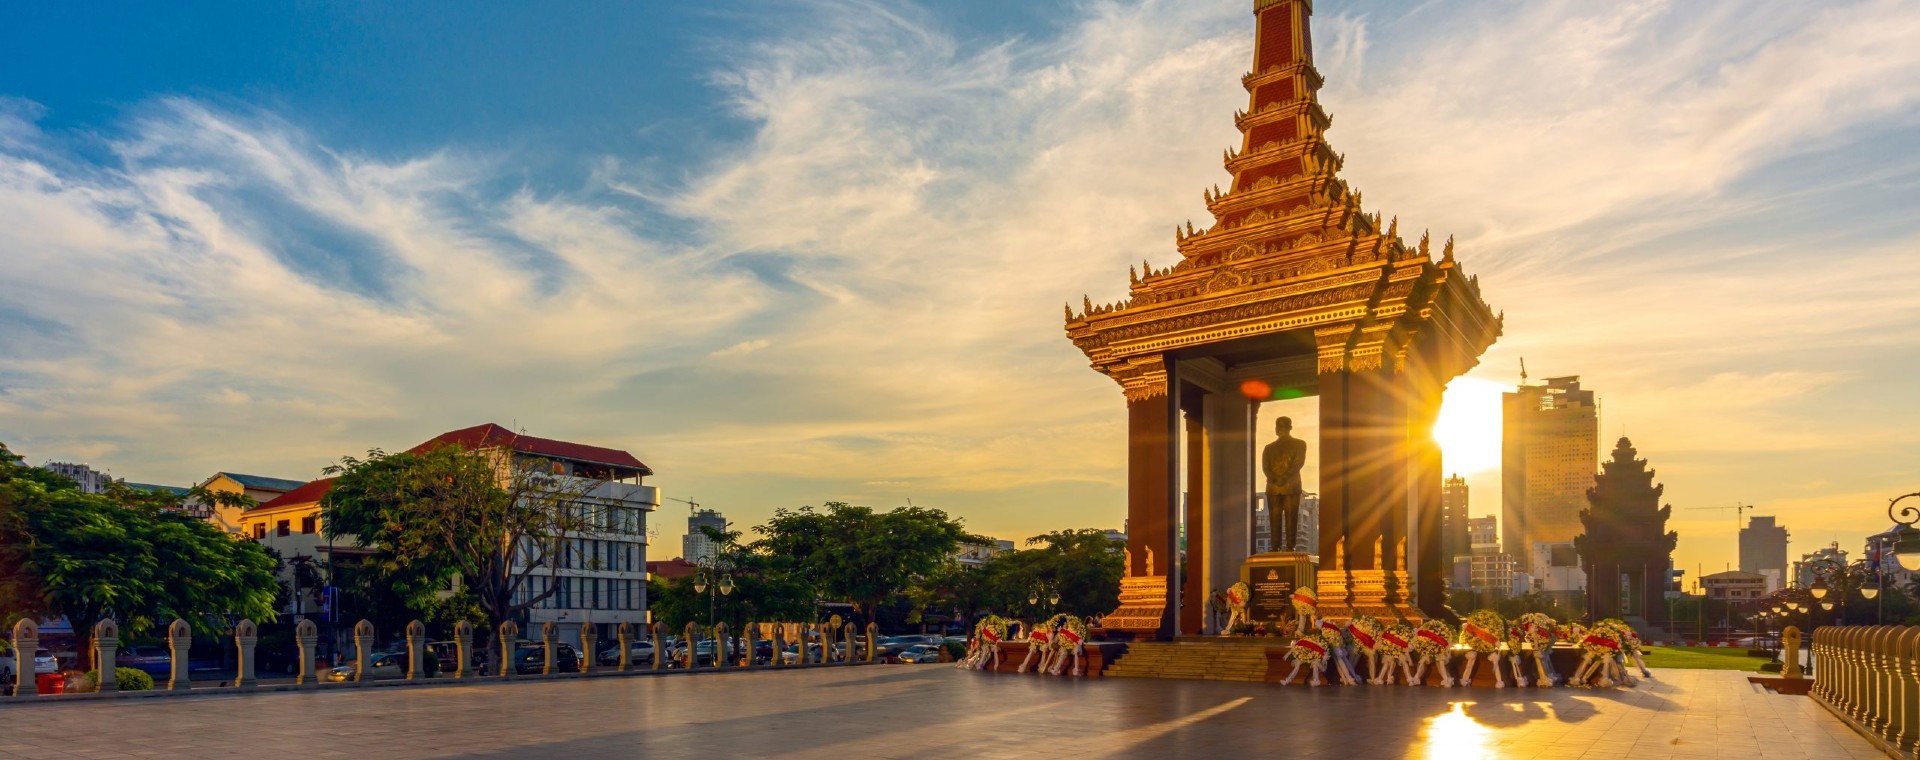 Cambodia Classic Tour: Phnom Penh to Siem Reap 5 days 4 nights